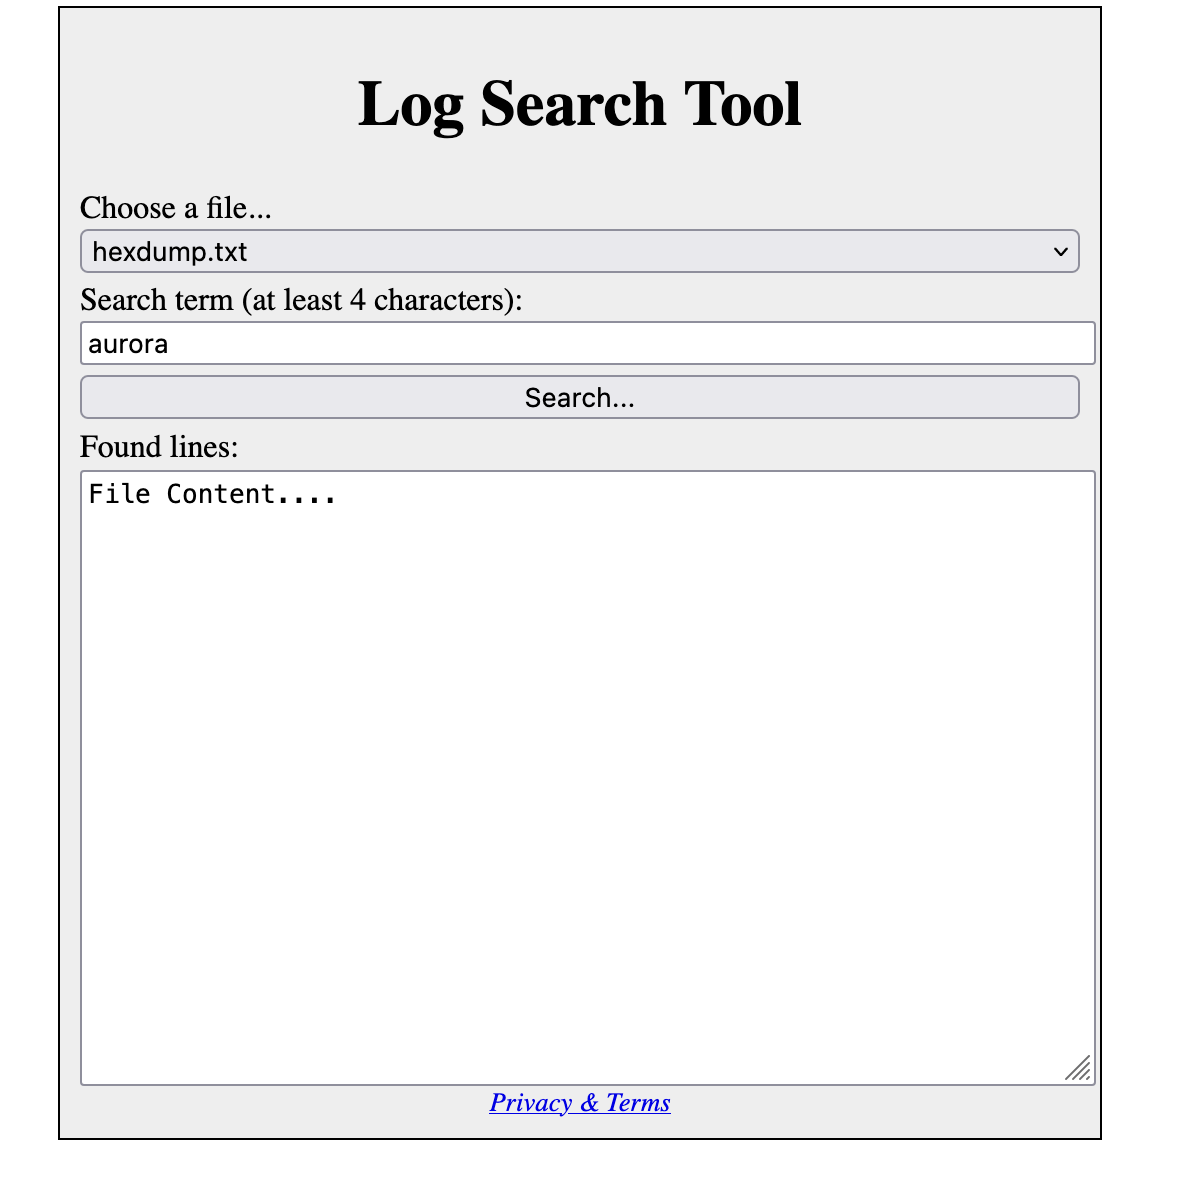 Log Search Tool